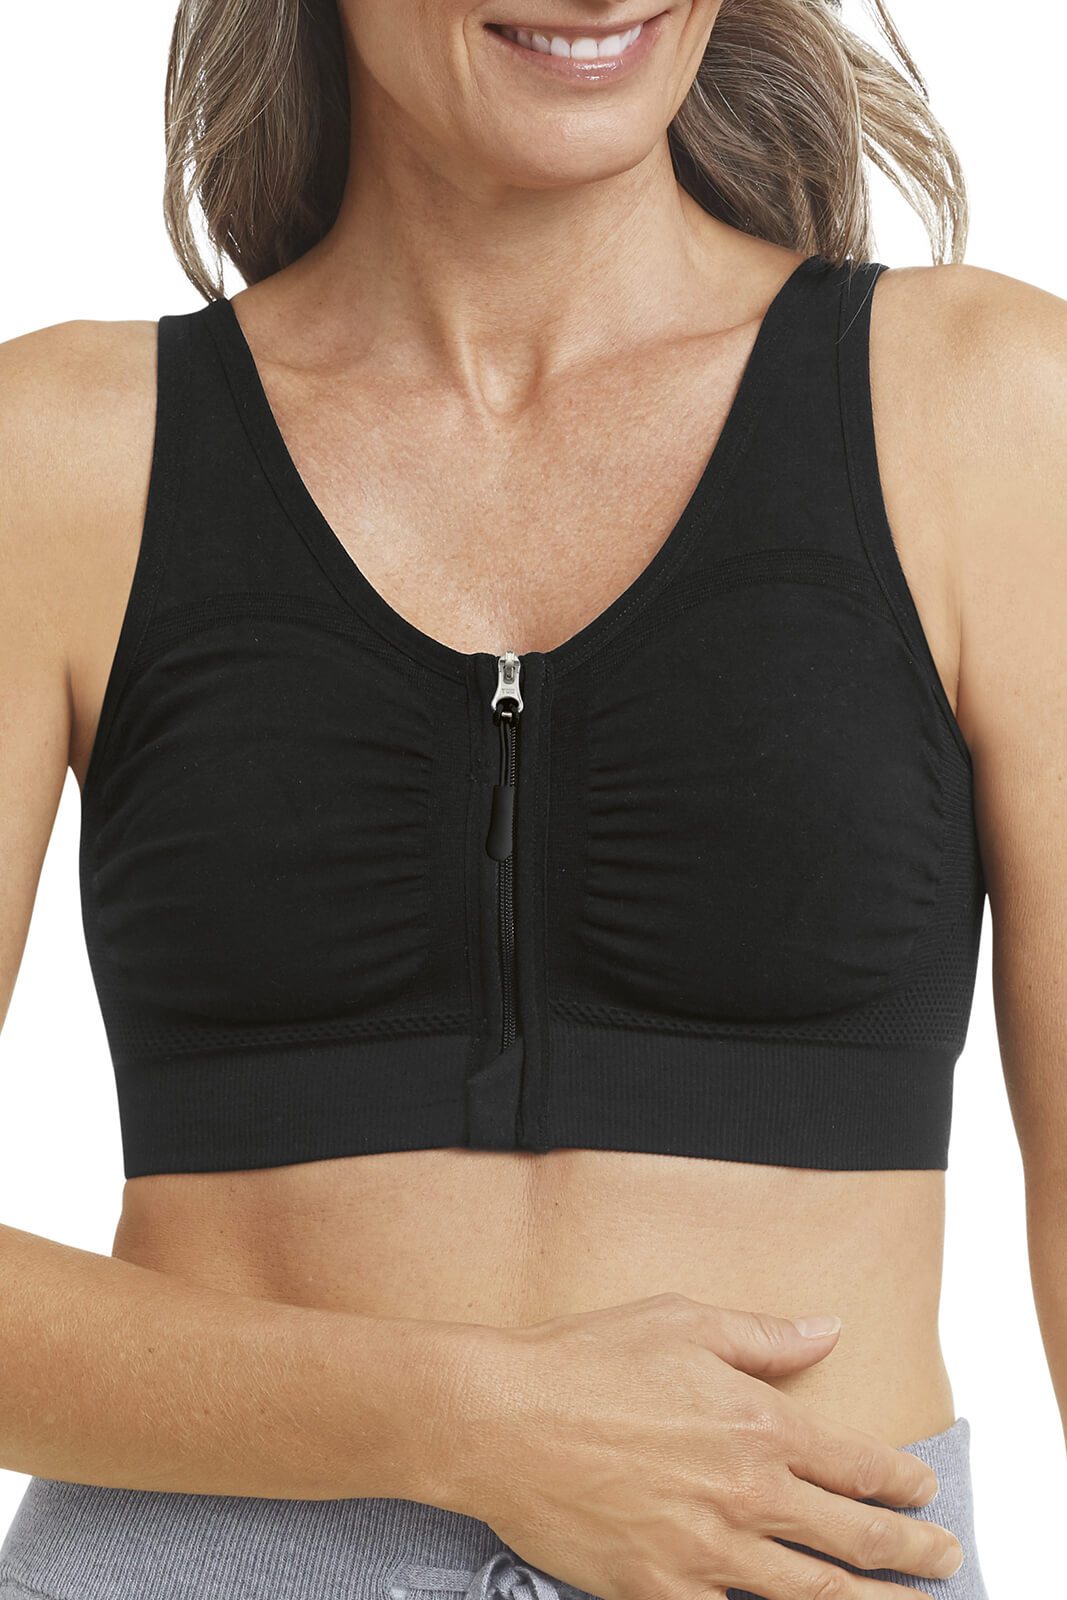 Amoena Recovery bra, front closure, adjustable comfort straps